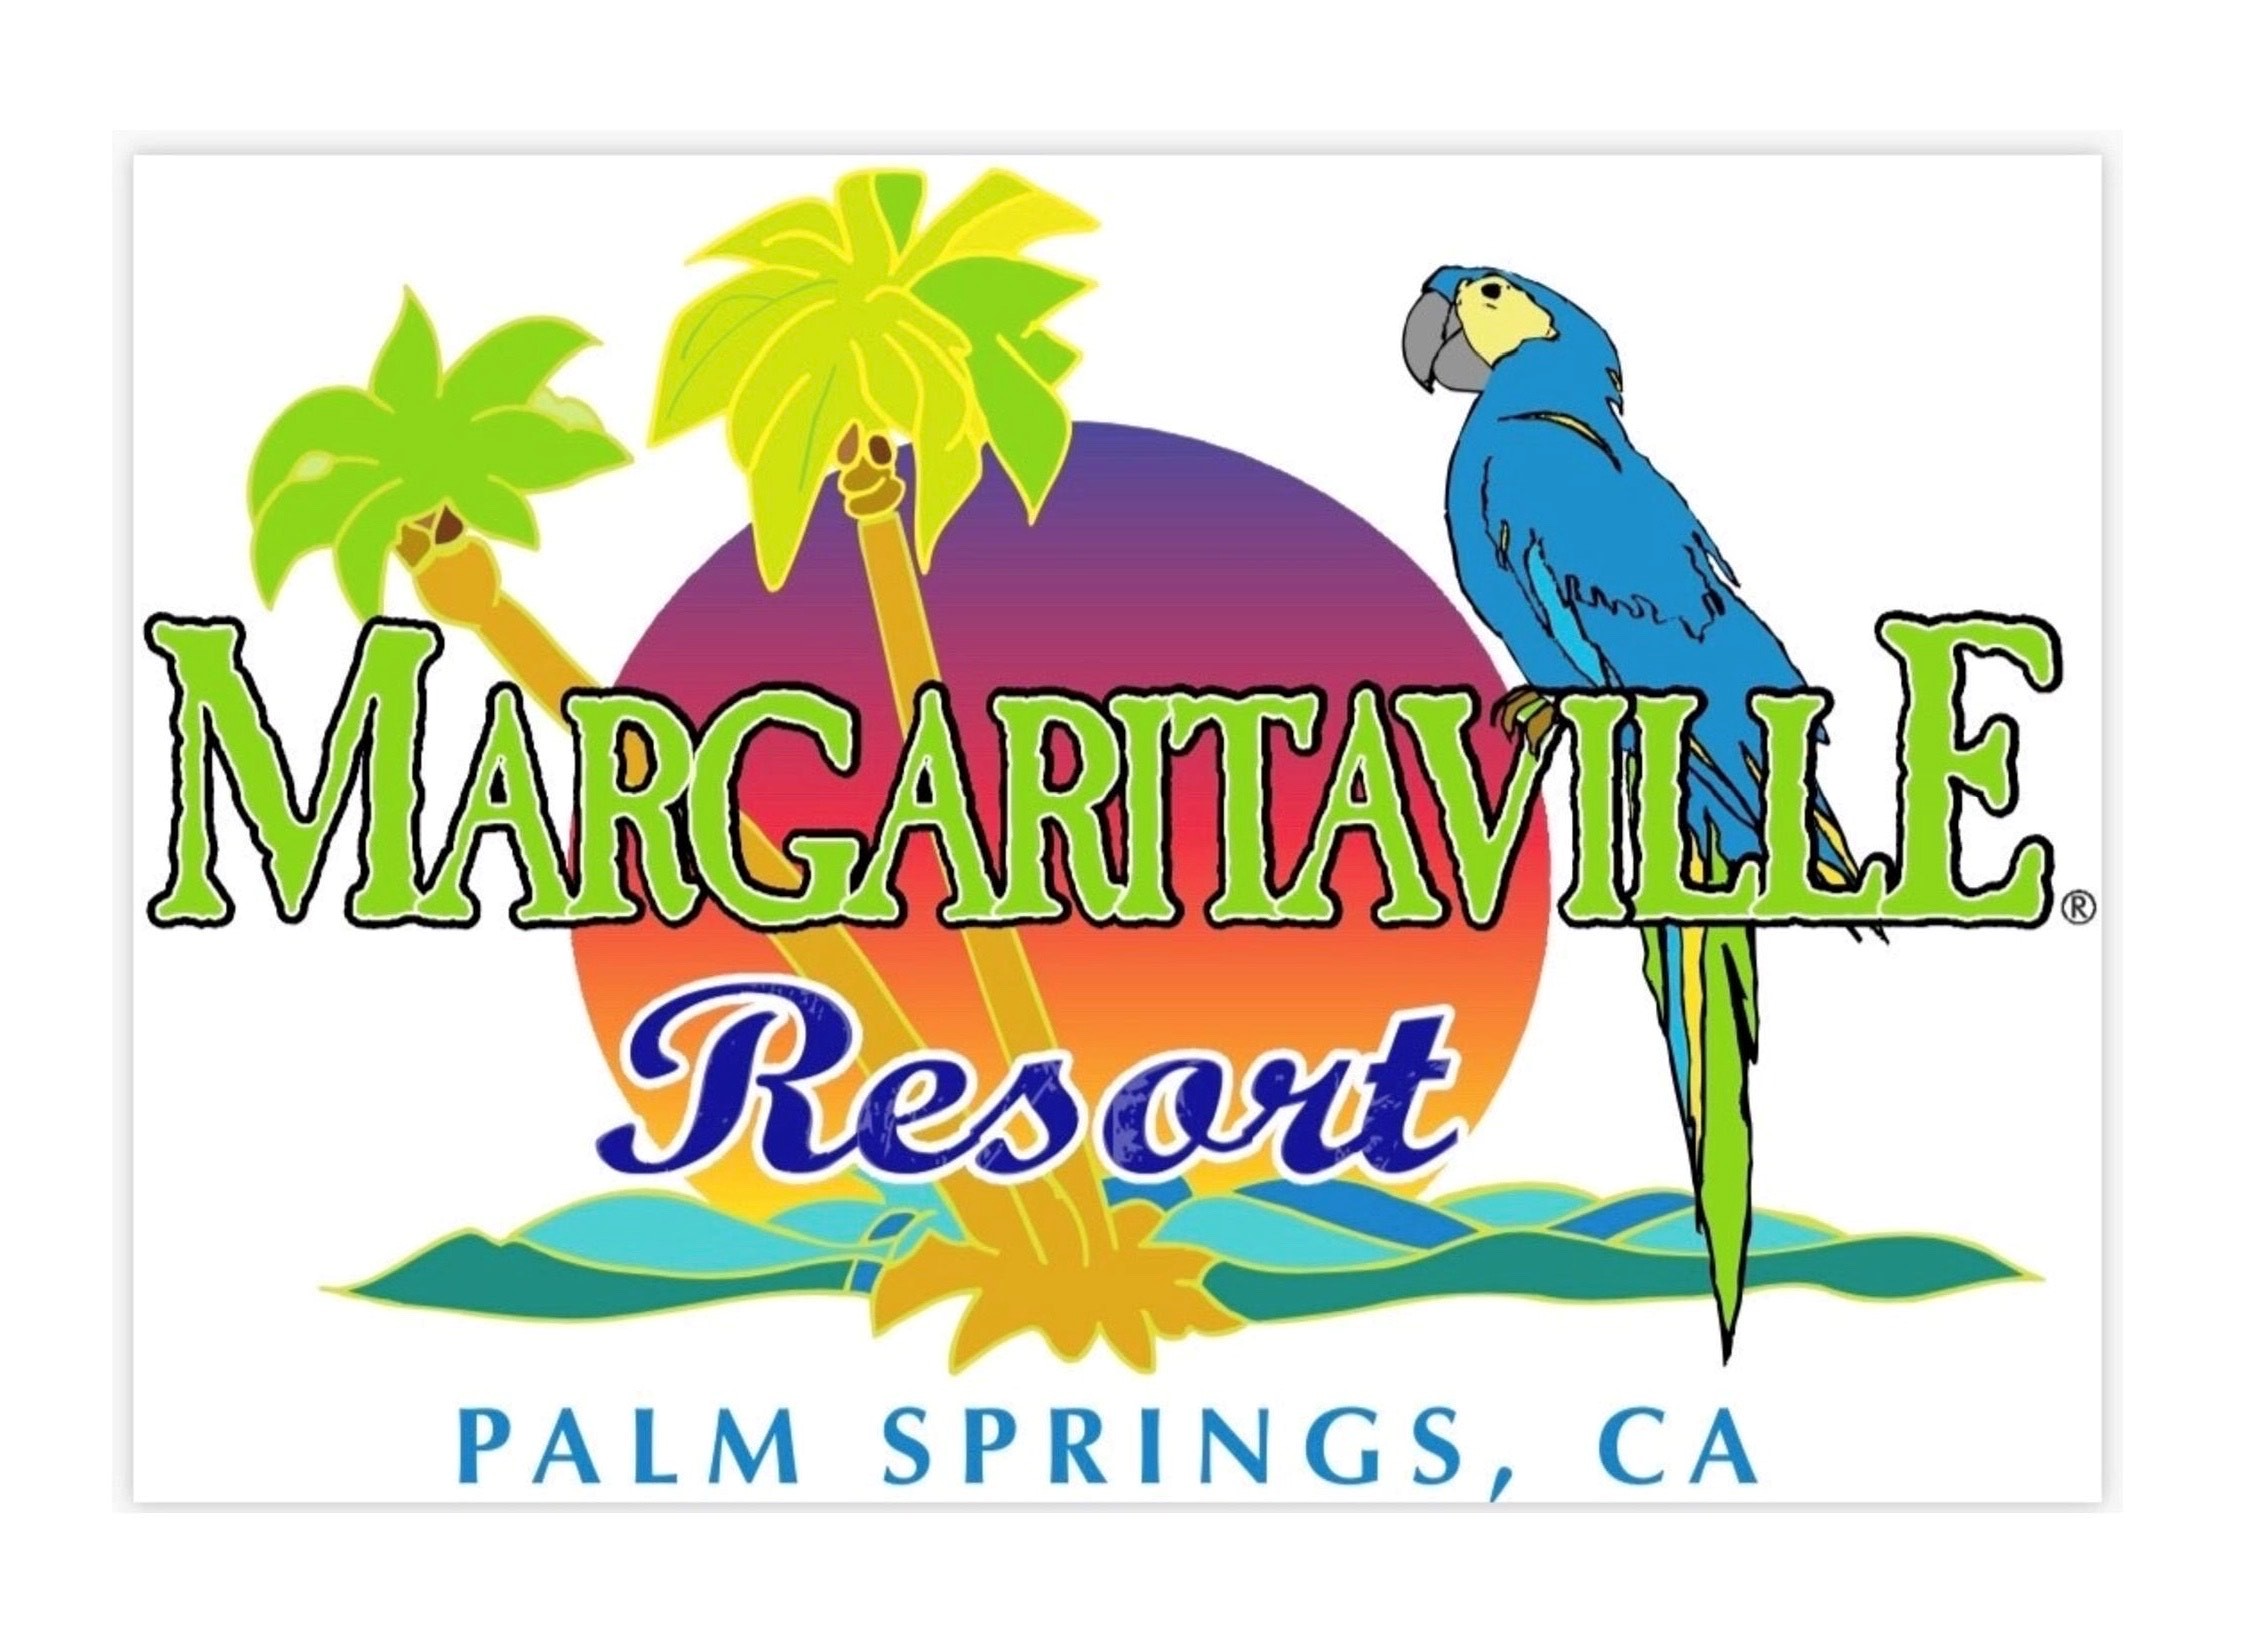 Margaritaville Resort Palm Springs llegará al desierto en otoño de 2020